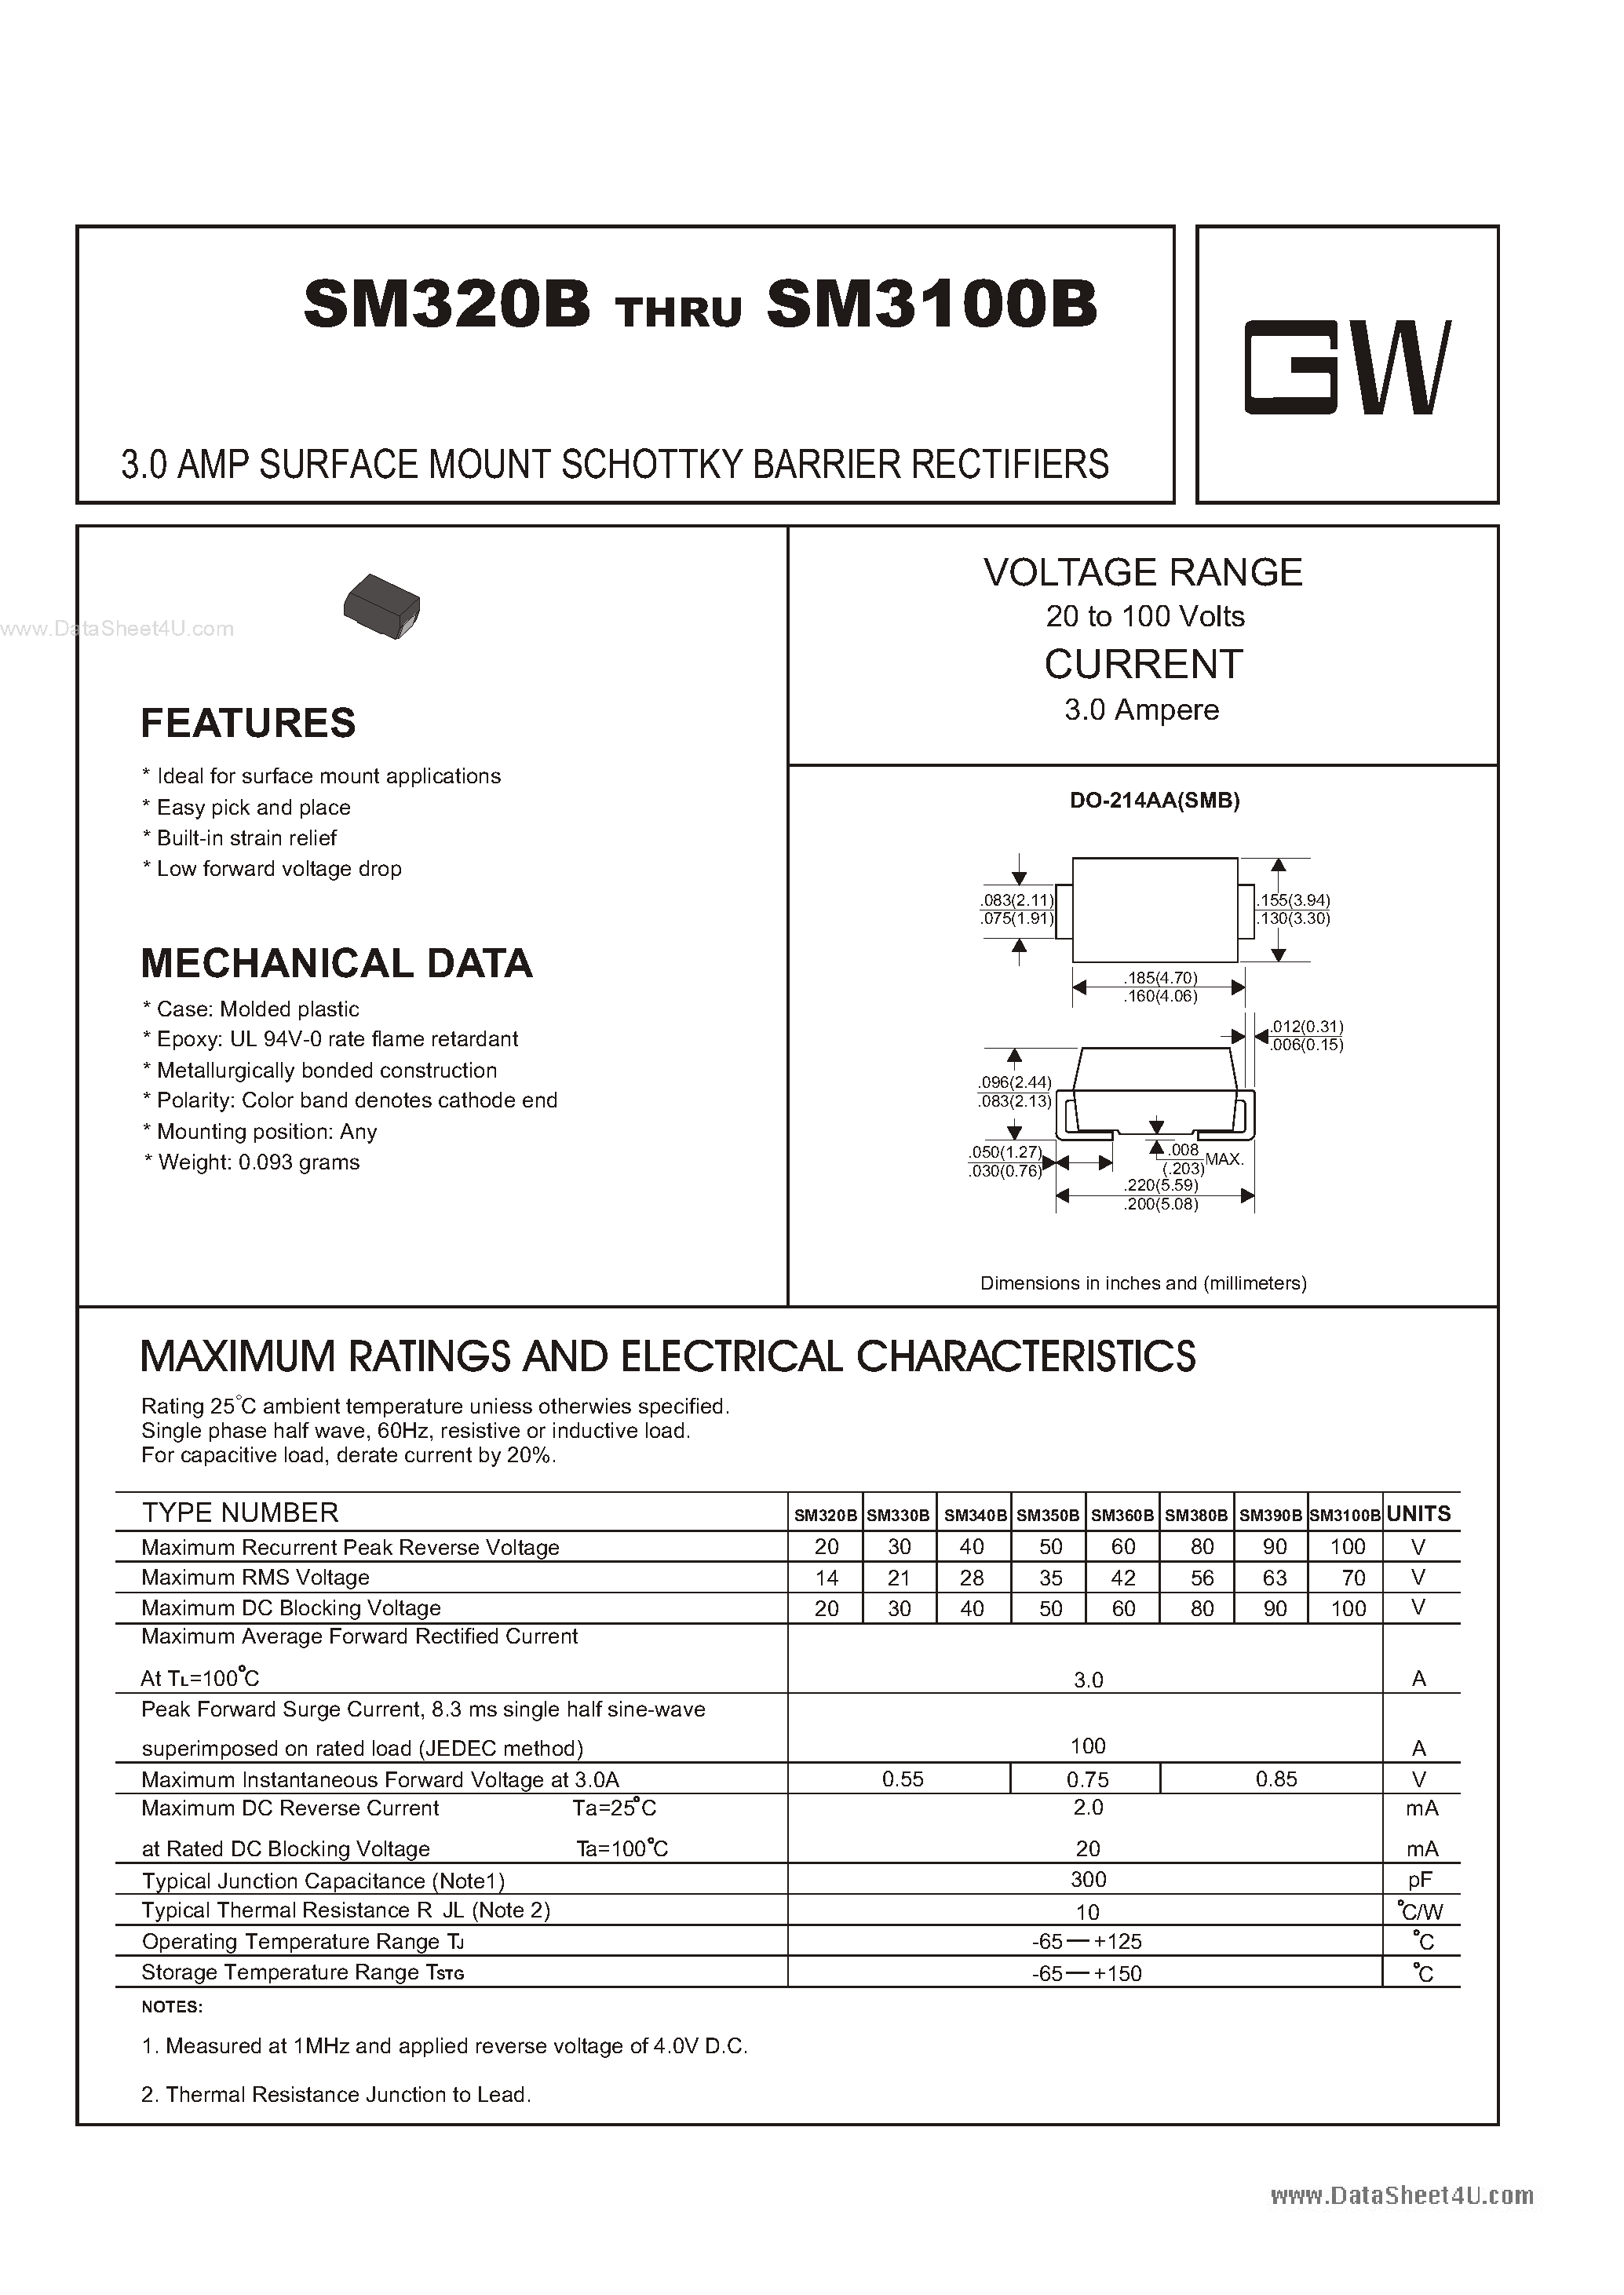 Datasheet SM3100B - (SM320B - SM3100B) 3.0 AMP SURFACE MOUNT SCHOTTKY BARRIER RECTIFIERS page 1